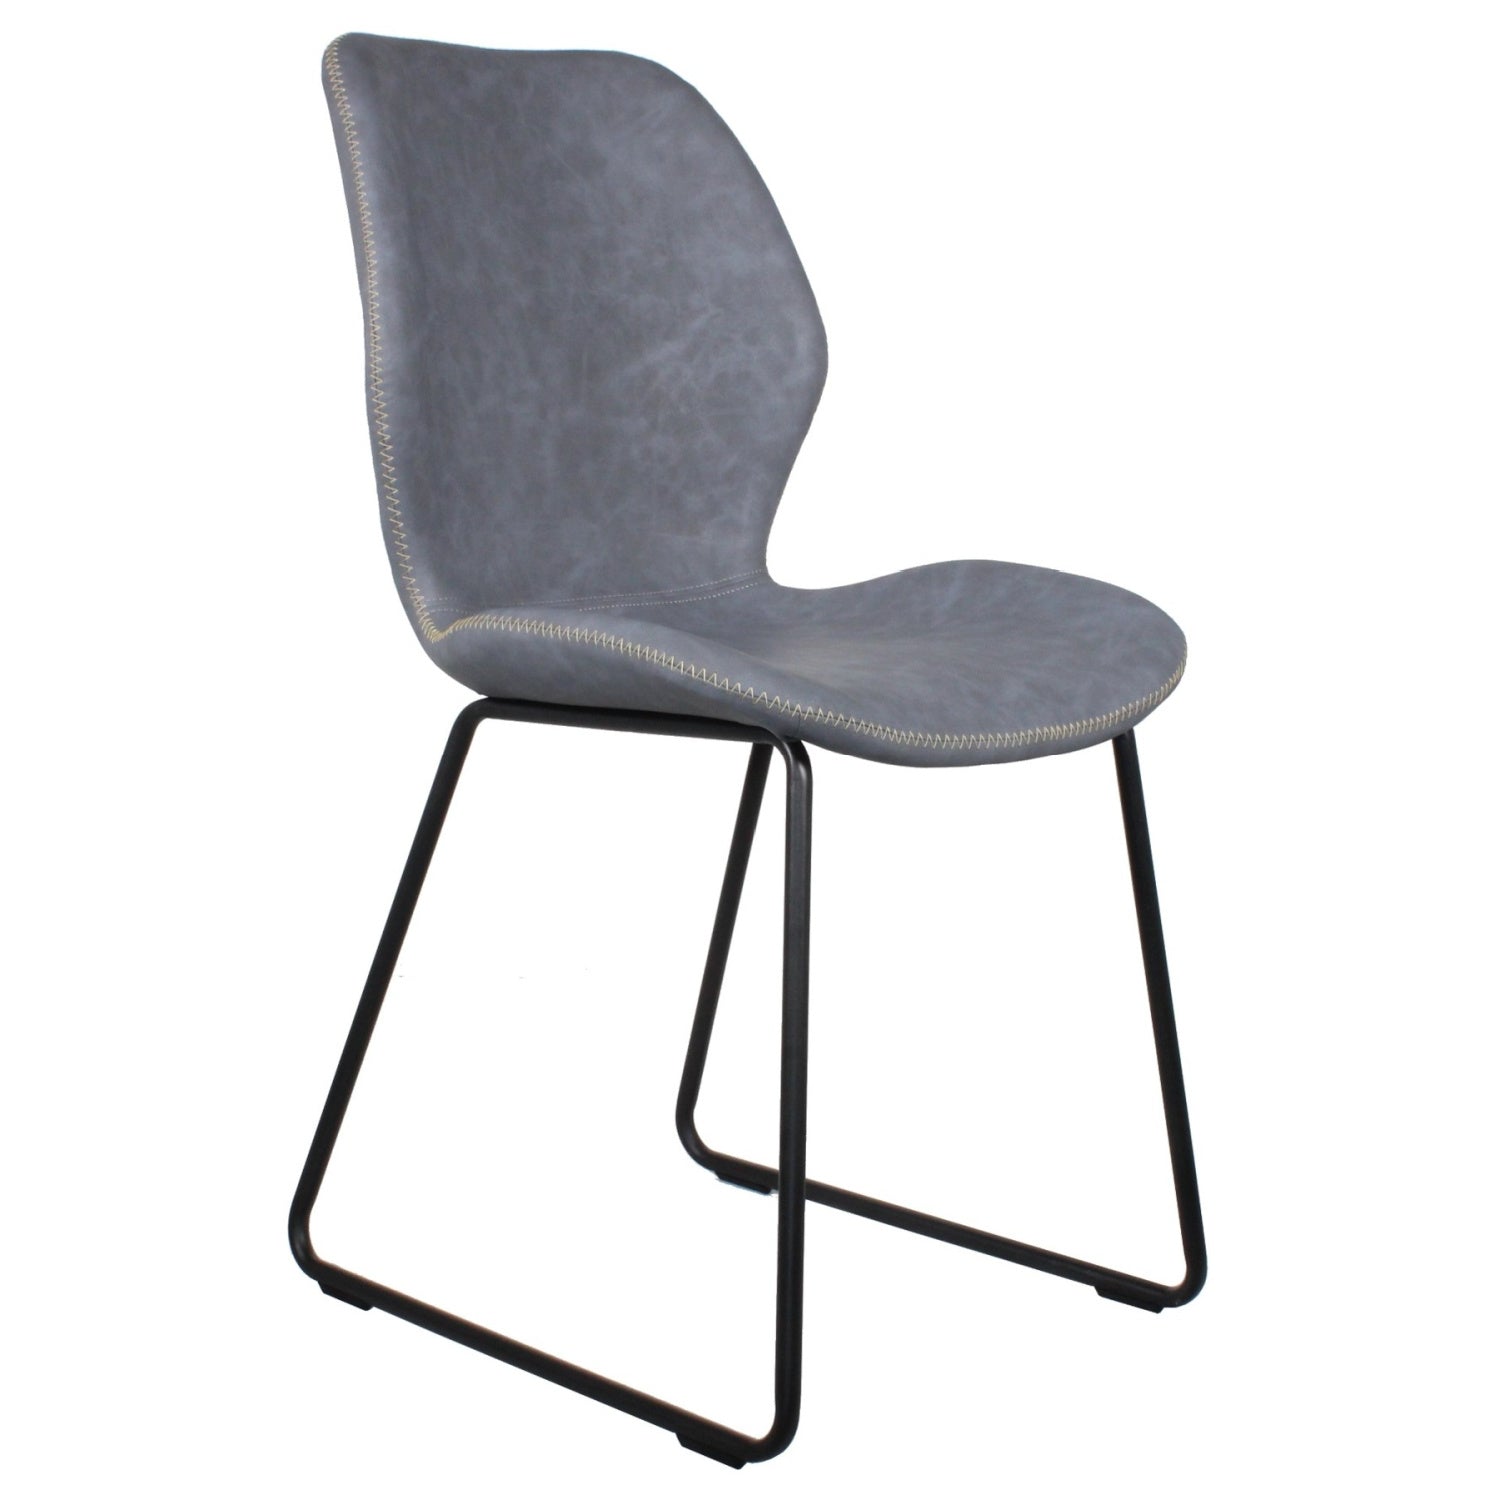 Callum Dining Chair - Light Grey